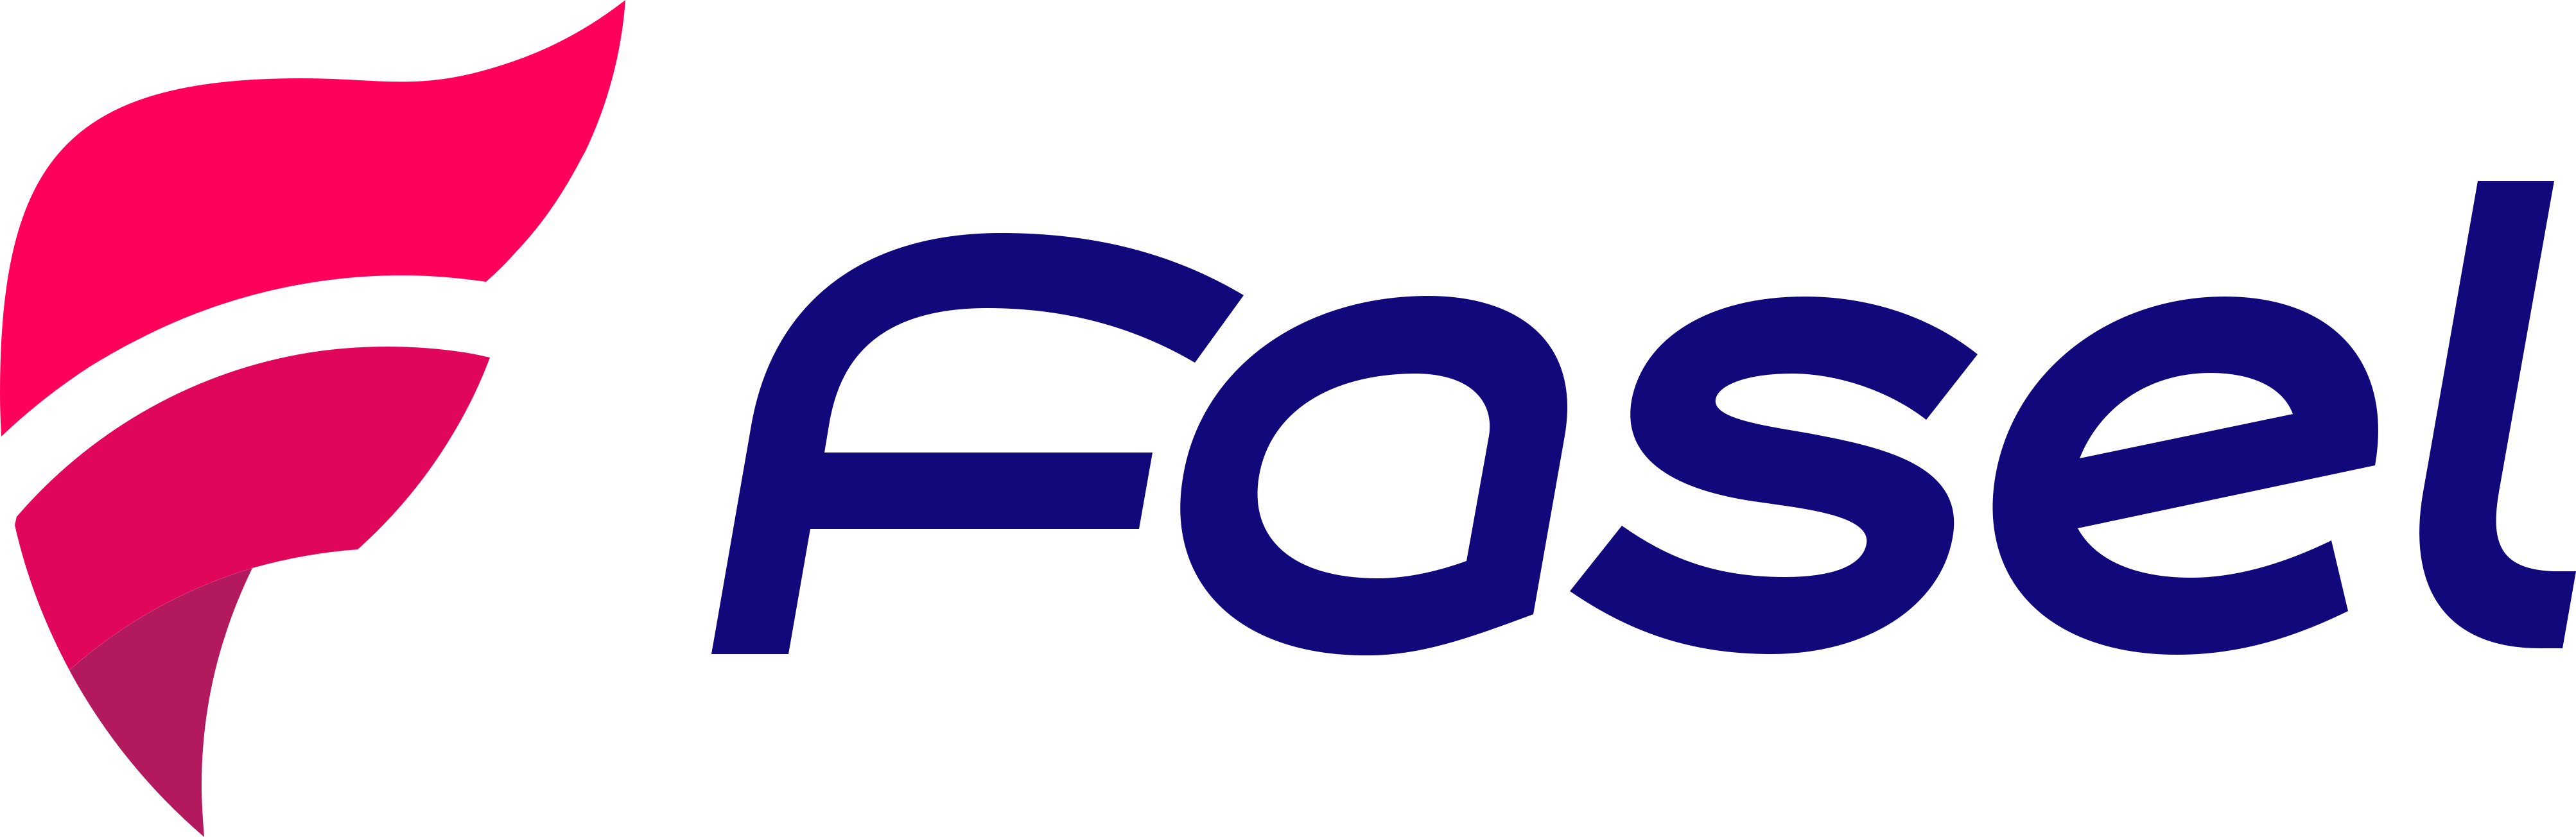 Fasel's logo